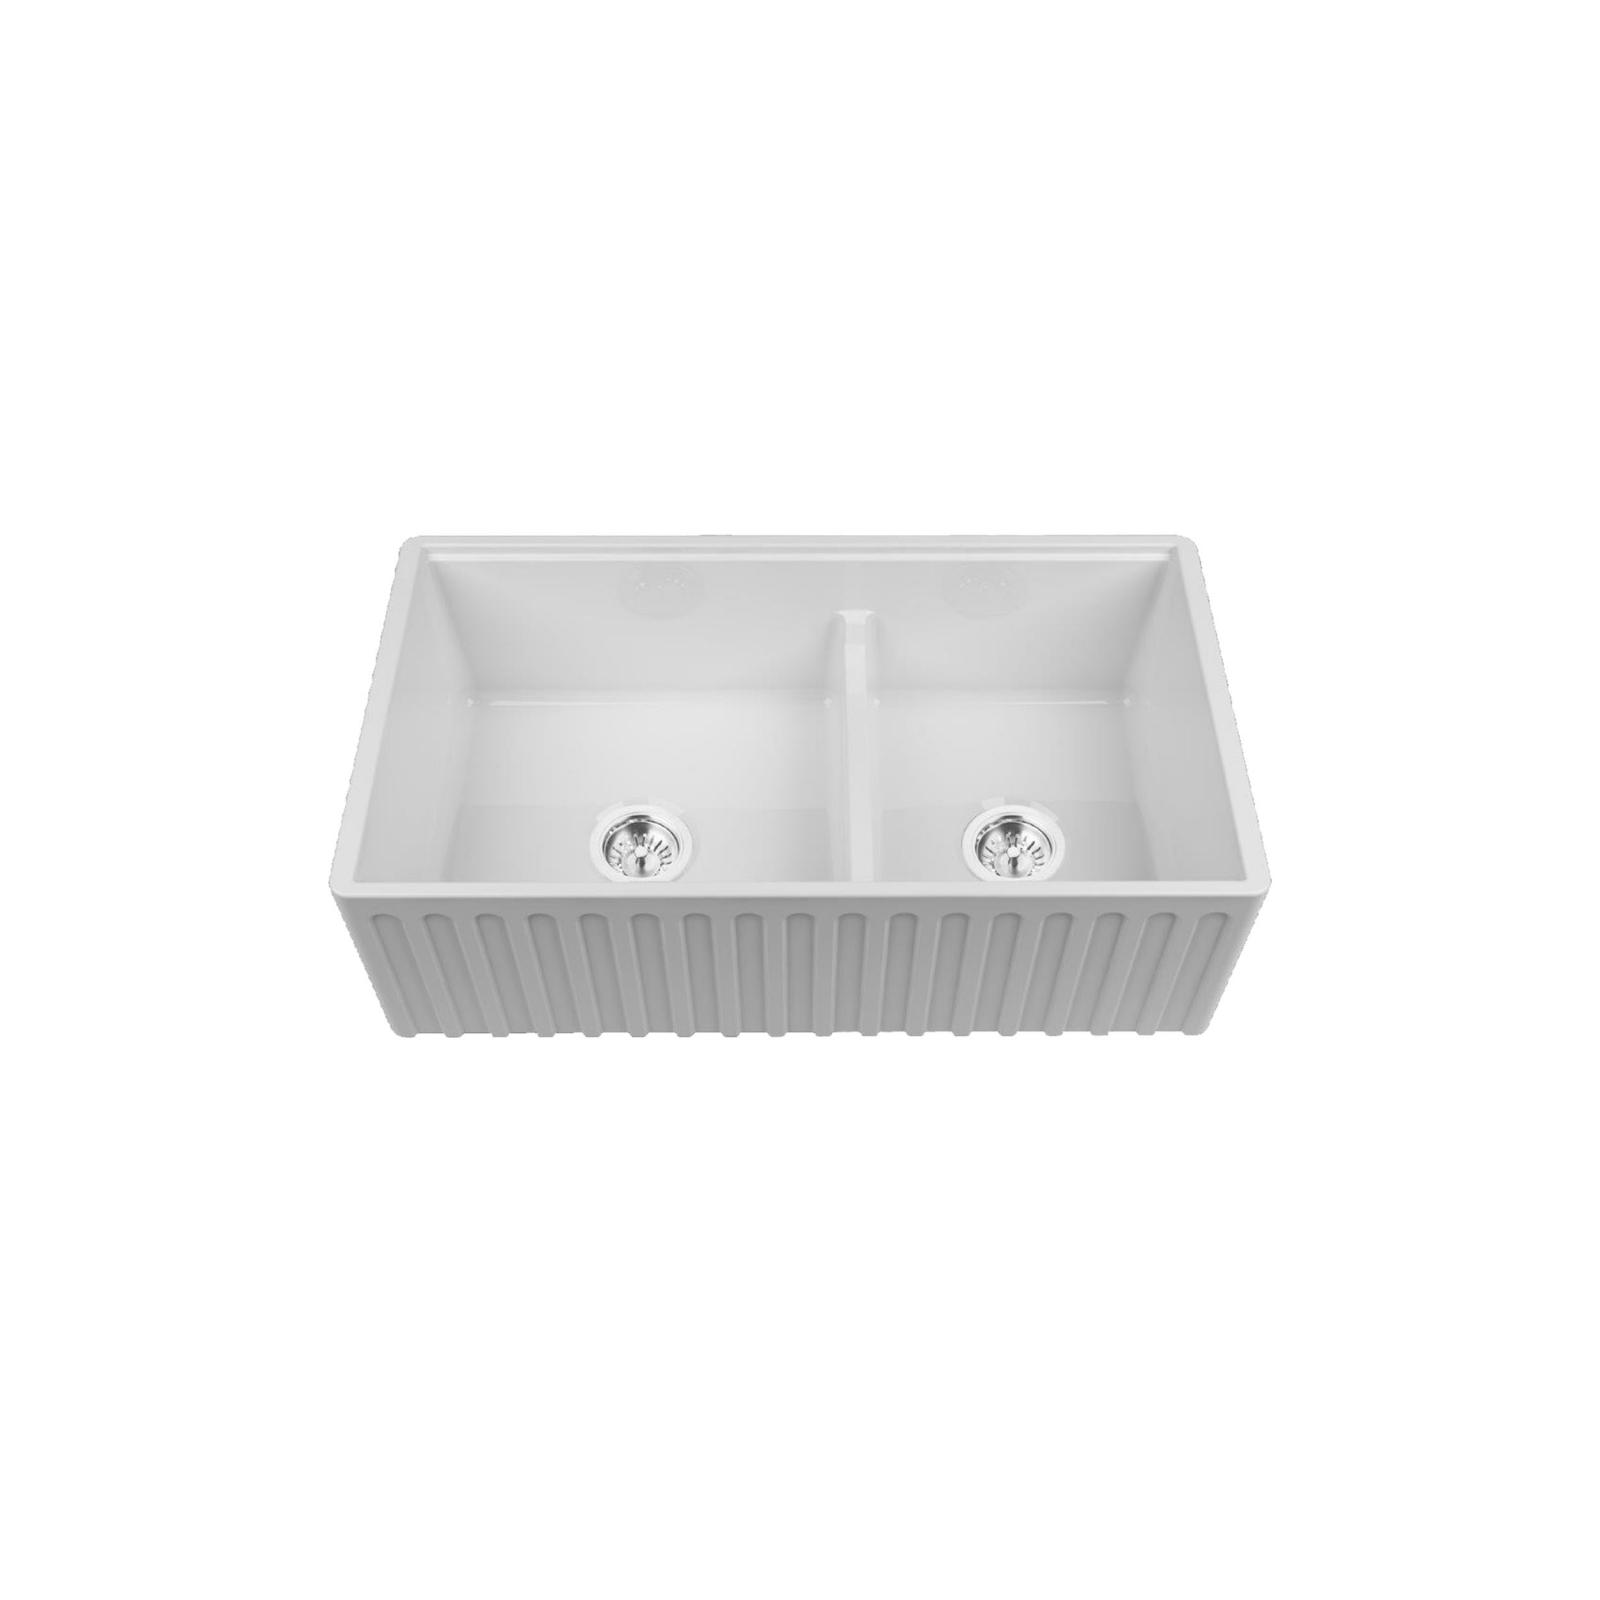 High-quality sink Louis Le Grand II - single bowl, ceramic